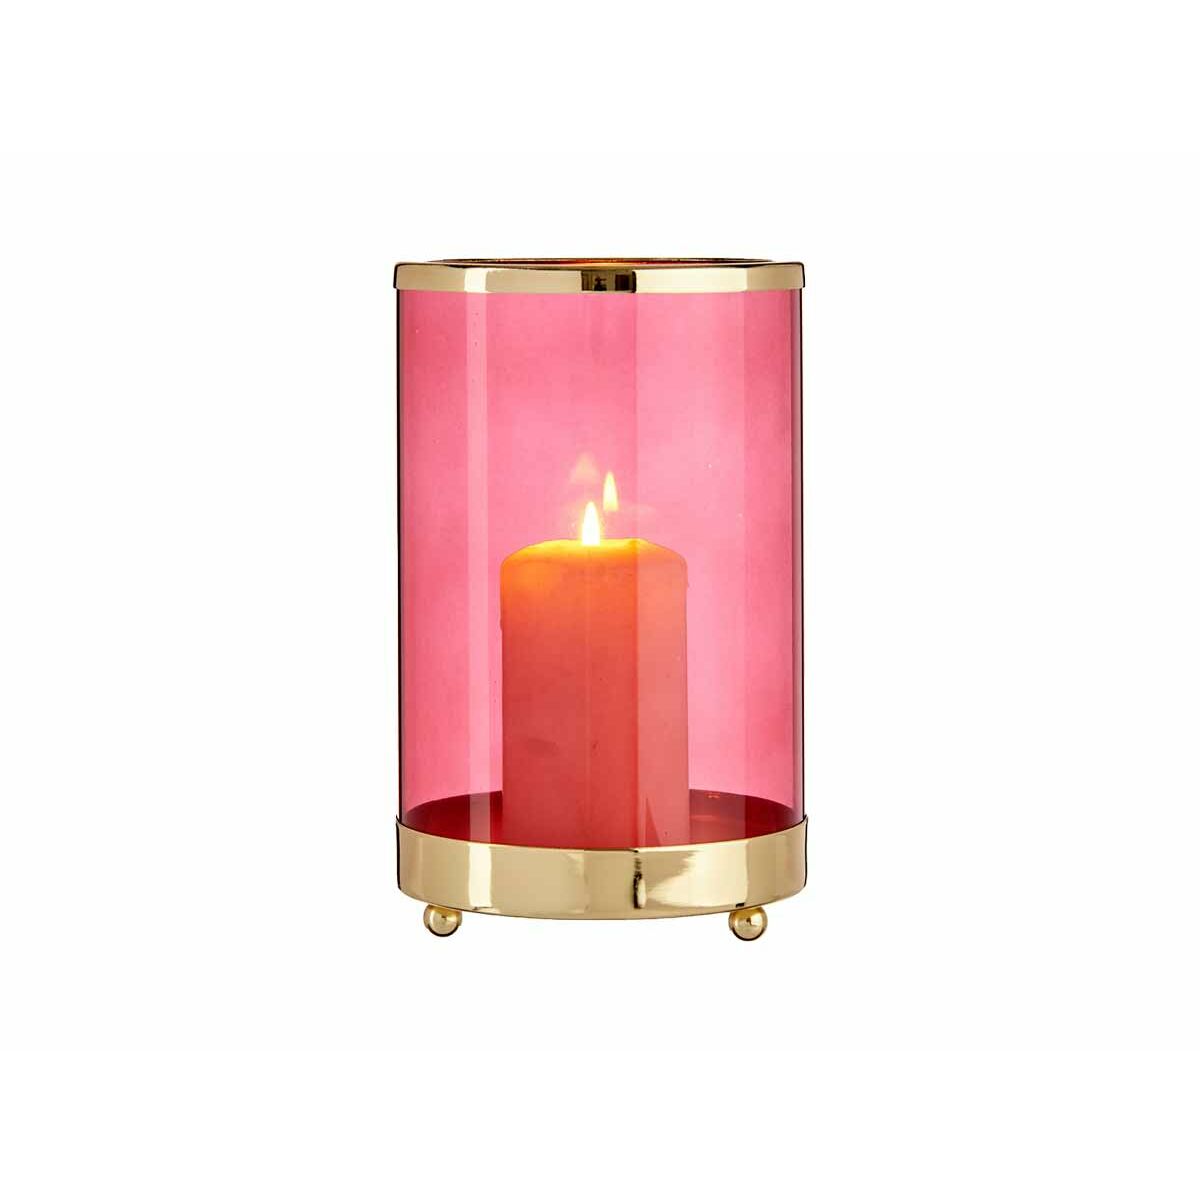 Kerzenschale Rosa Gold Zylinder Metall Glas (12,2 x 19,5 x 12,2 cm)